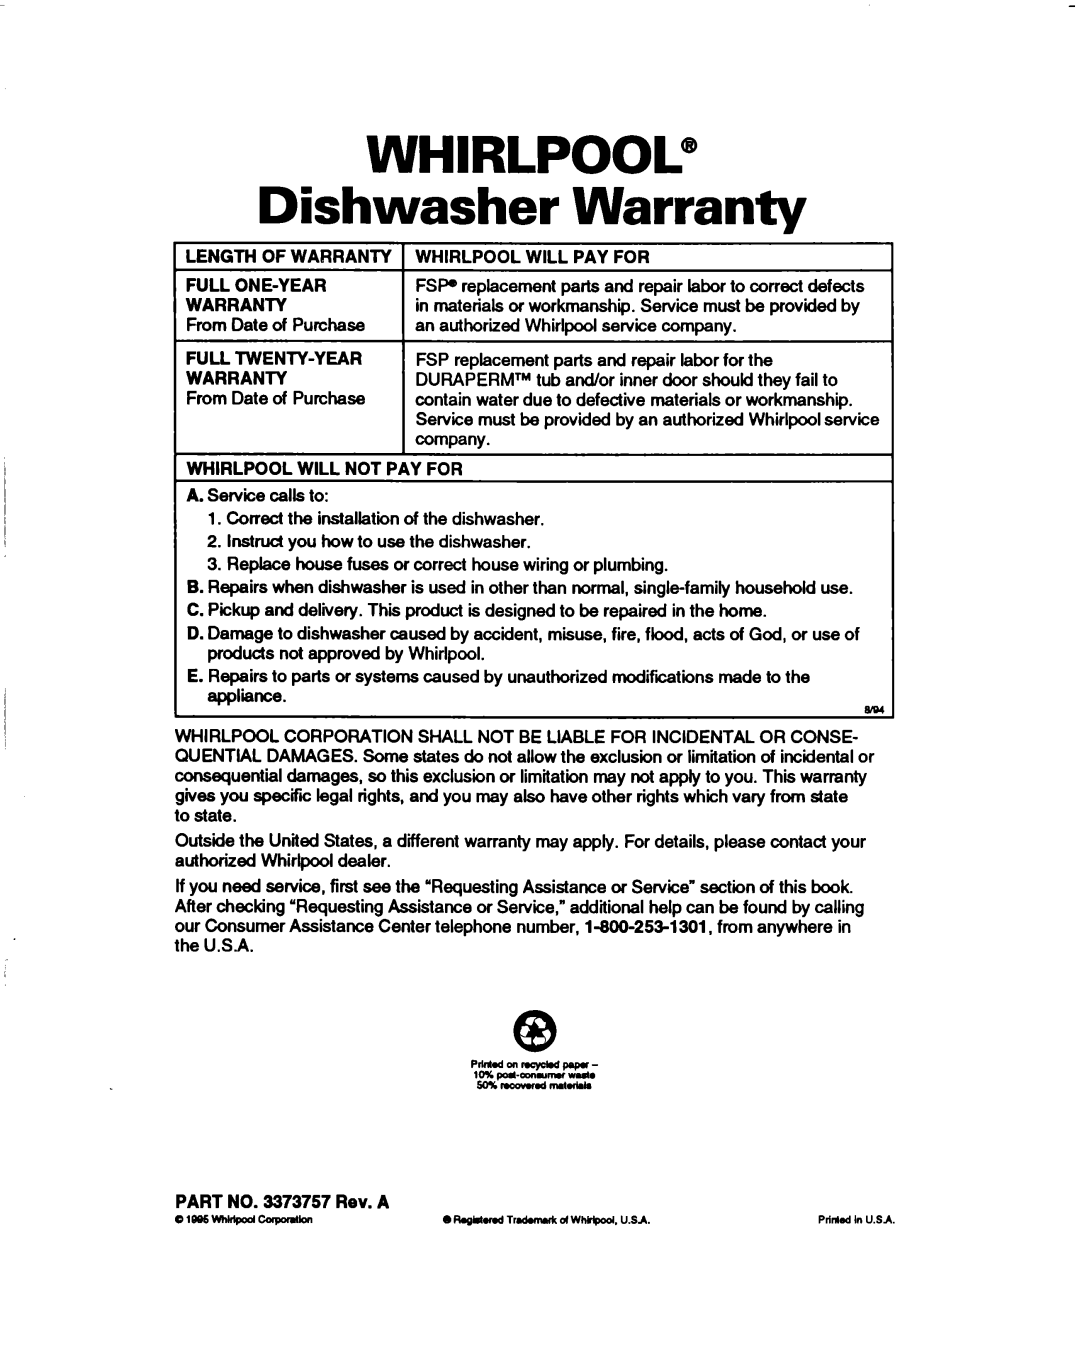 Whirlpool 830 Series, 800 Series, 400 Series warranty Whirlpool@, Warranty, Dishwasher 